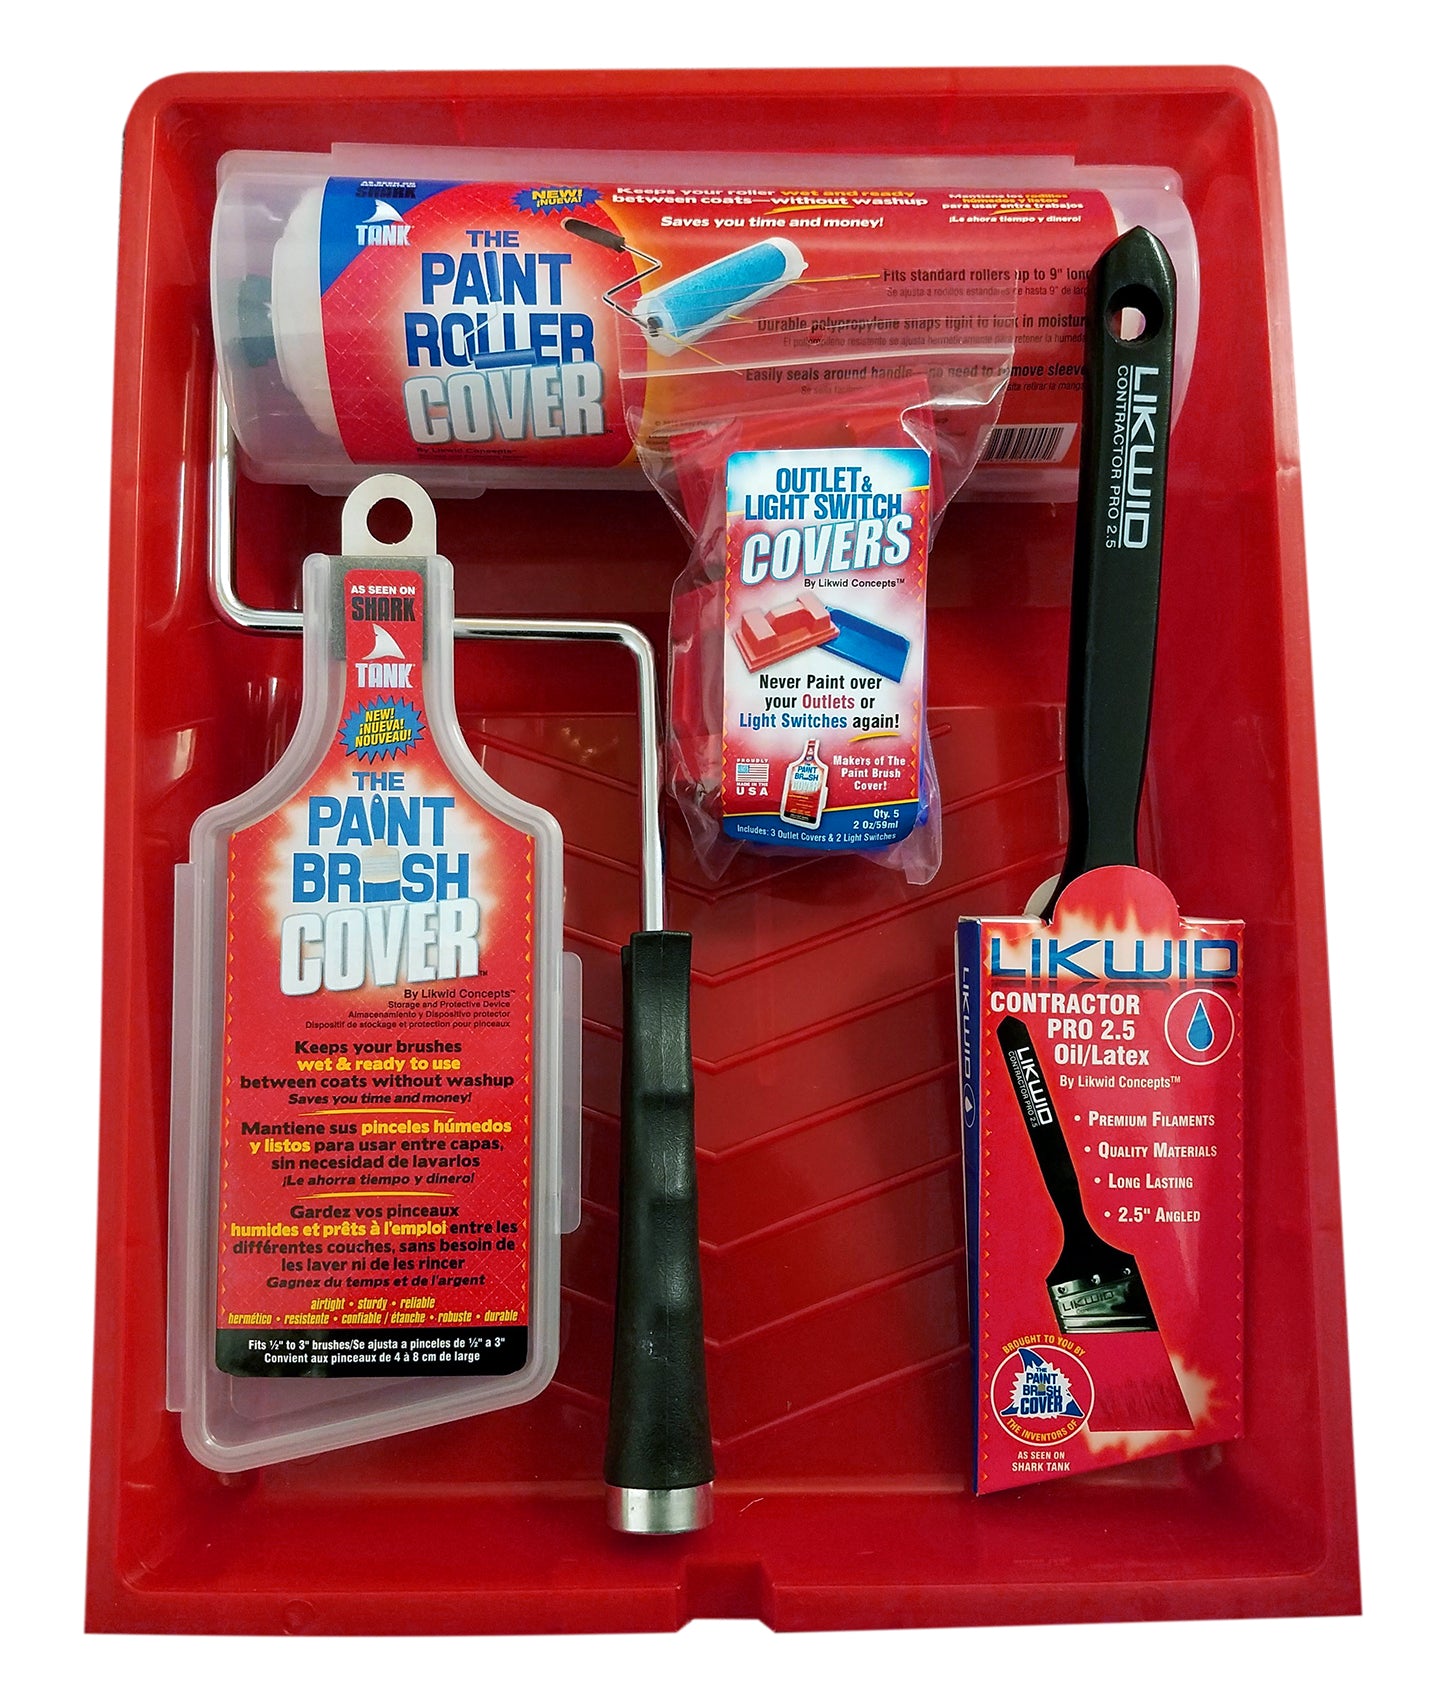 Paint Brush Cover DIY Painters Kit - Starter Kit